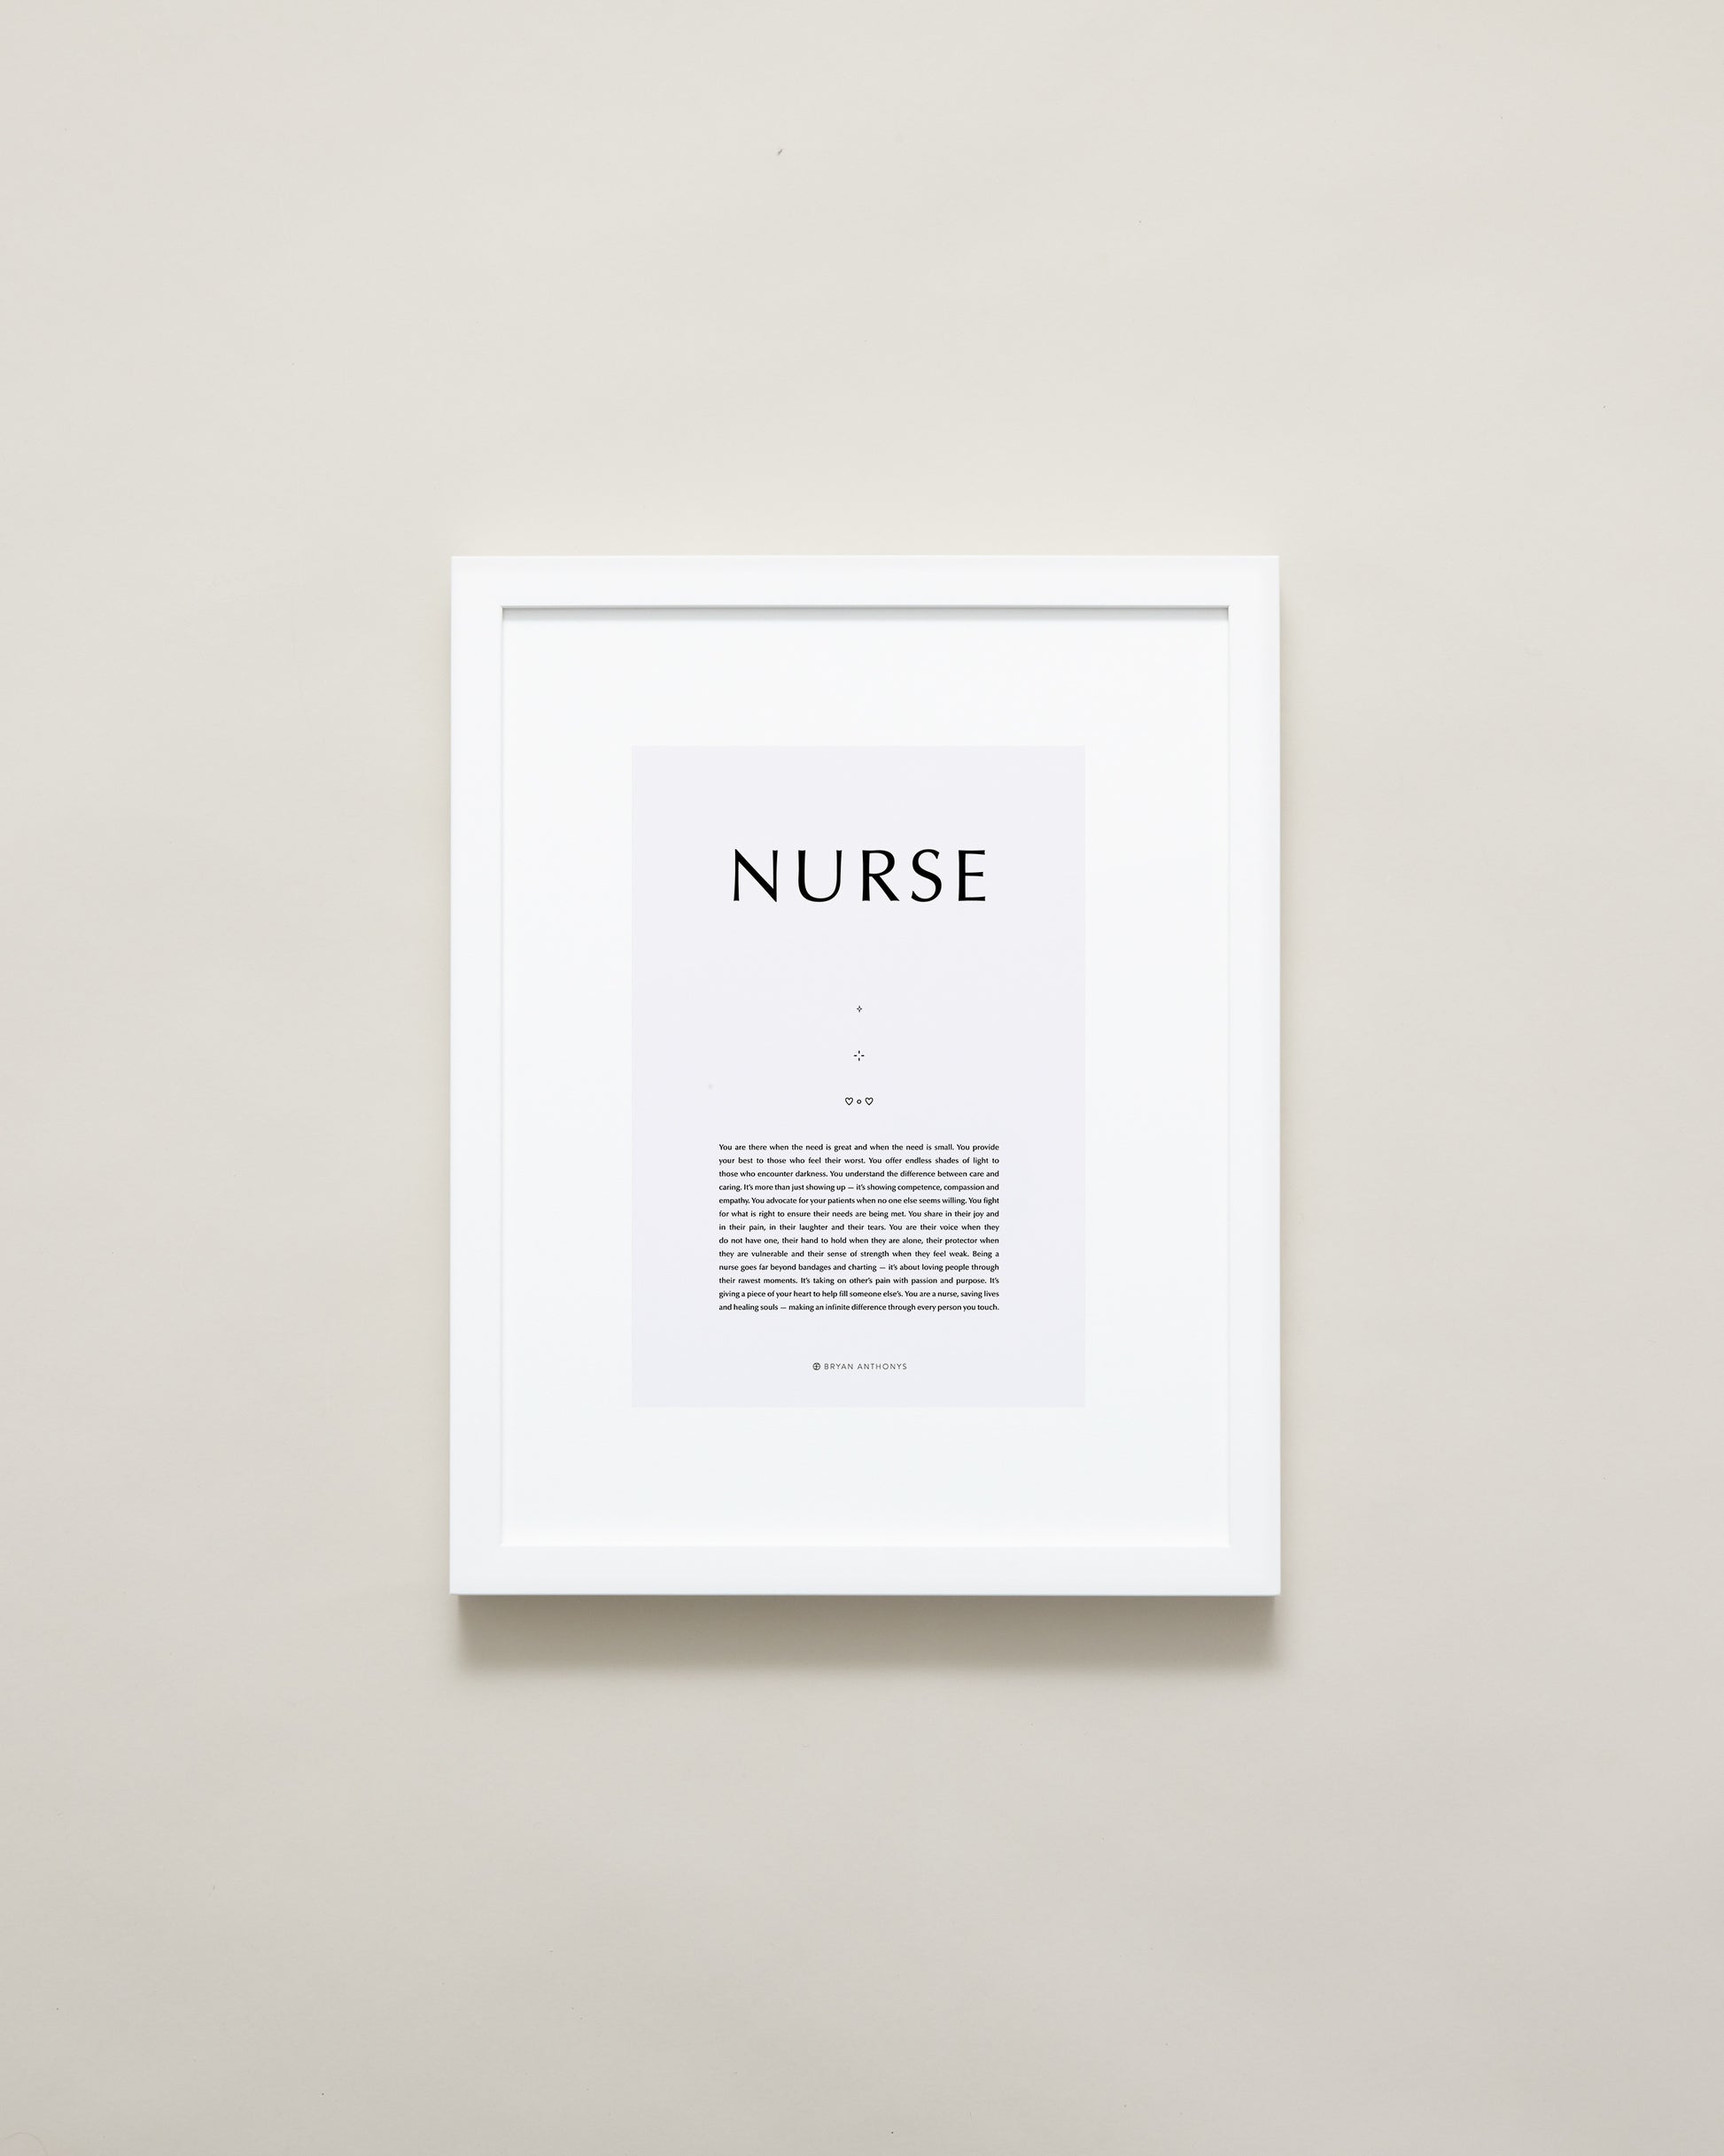 Bryan Anthonys Home Decor Purposeful Prints Nurse Iconic Framed Print Gray Art With White Frame 11x14